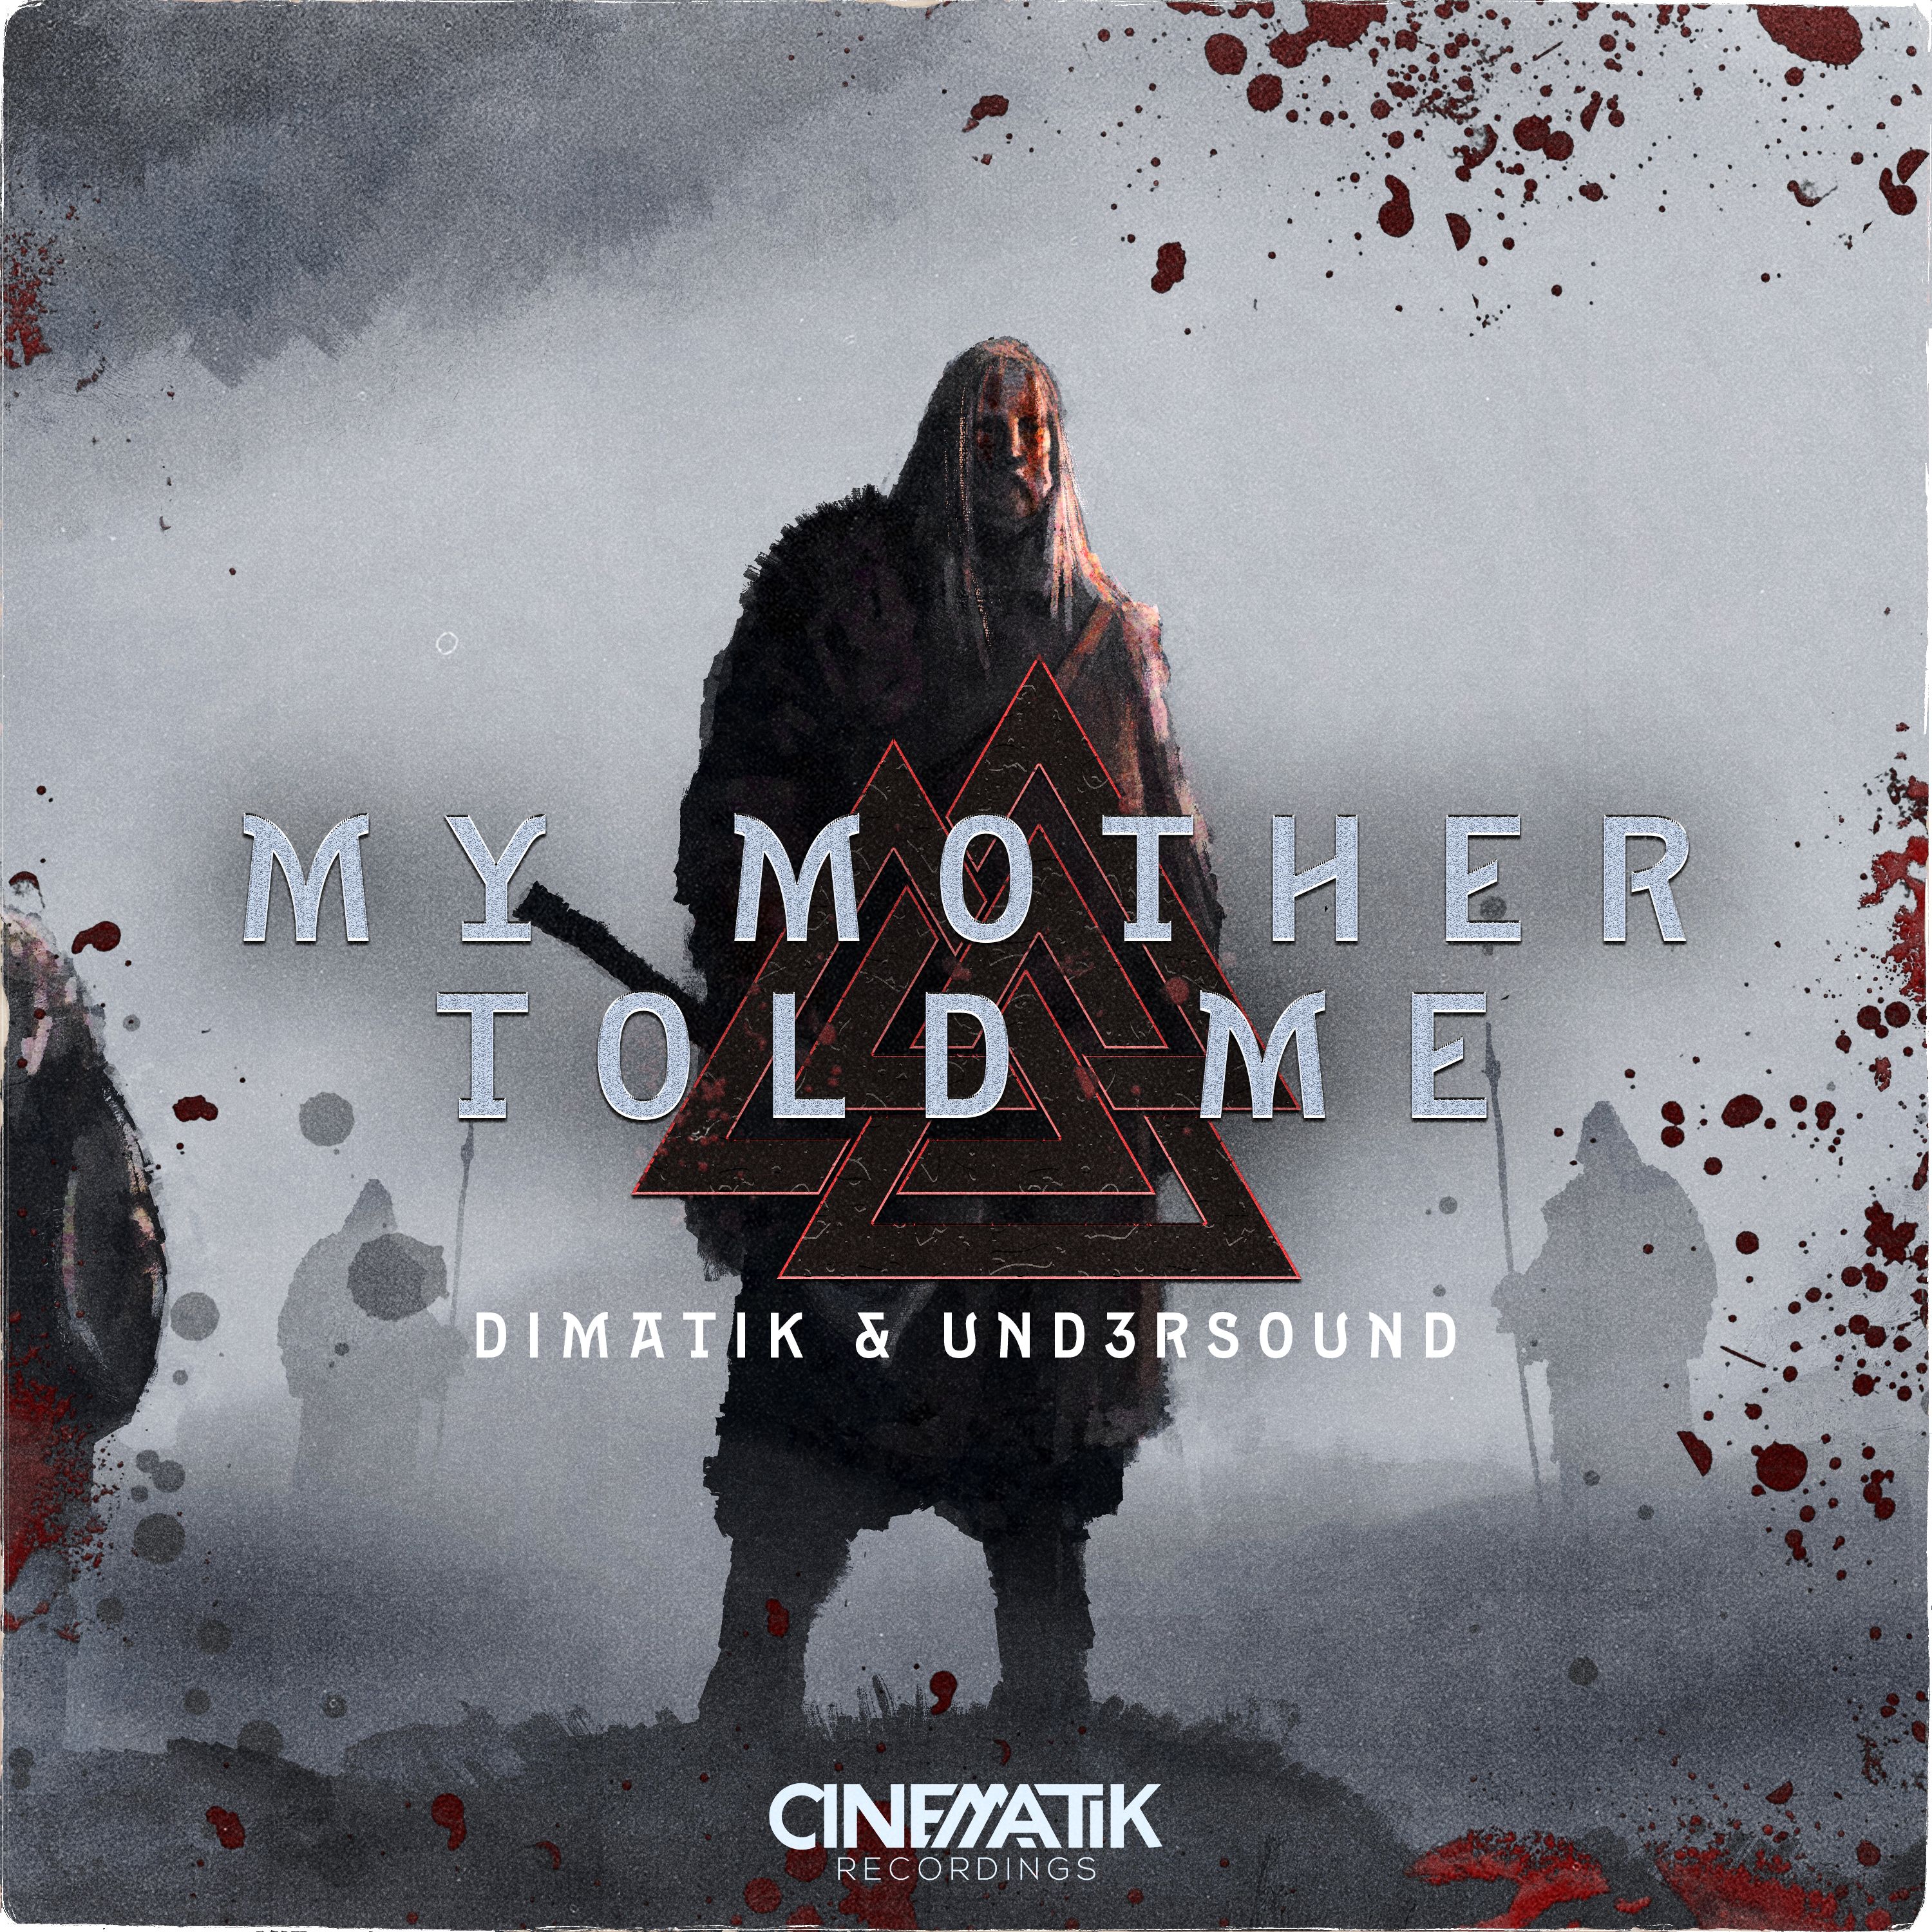 डाउनलोड करा Dimatik & Und3rsound - My Mother Told Me